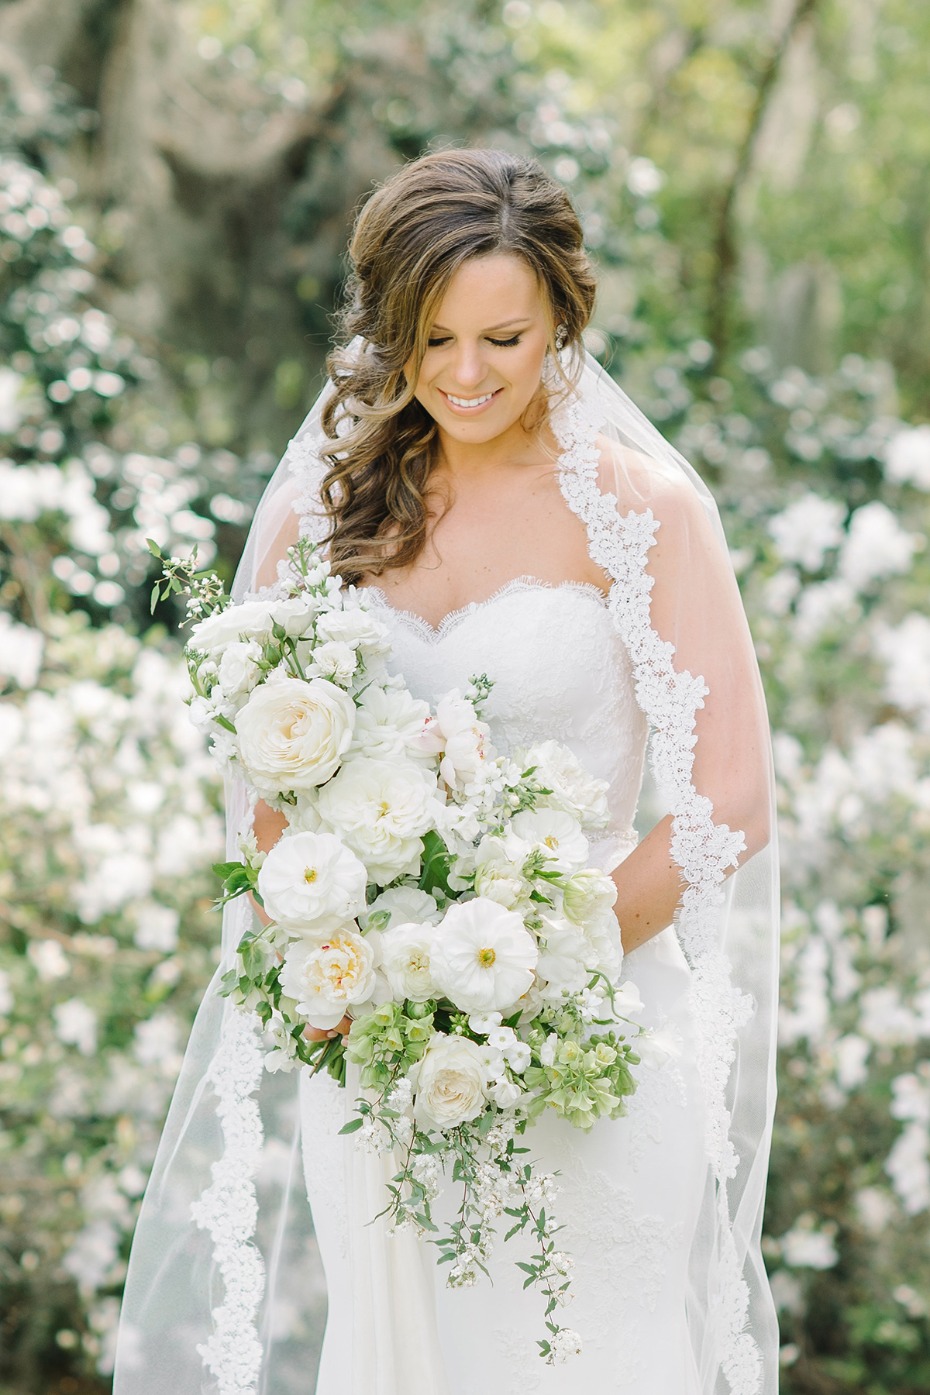 Asymmetrical white wedding bouquet